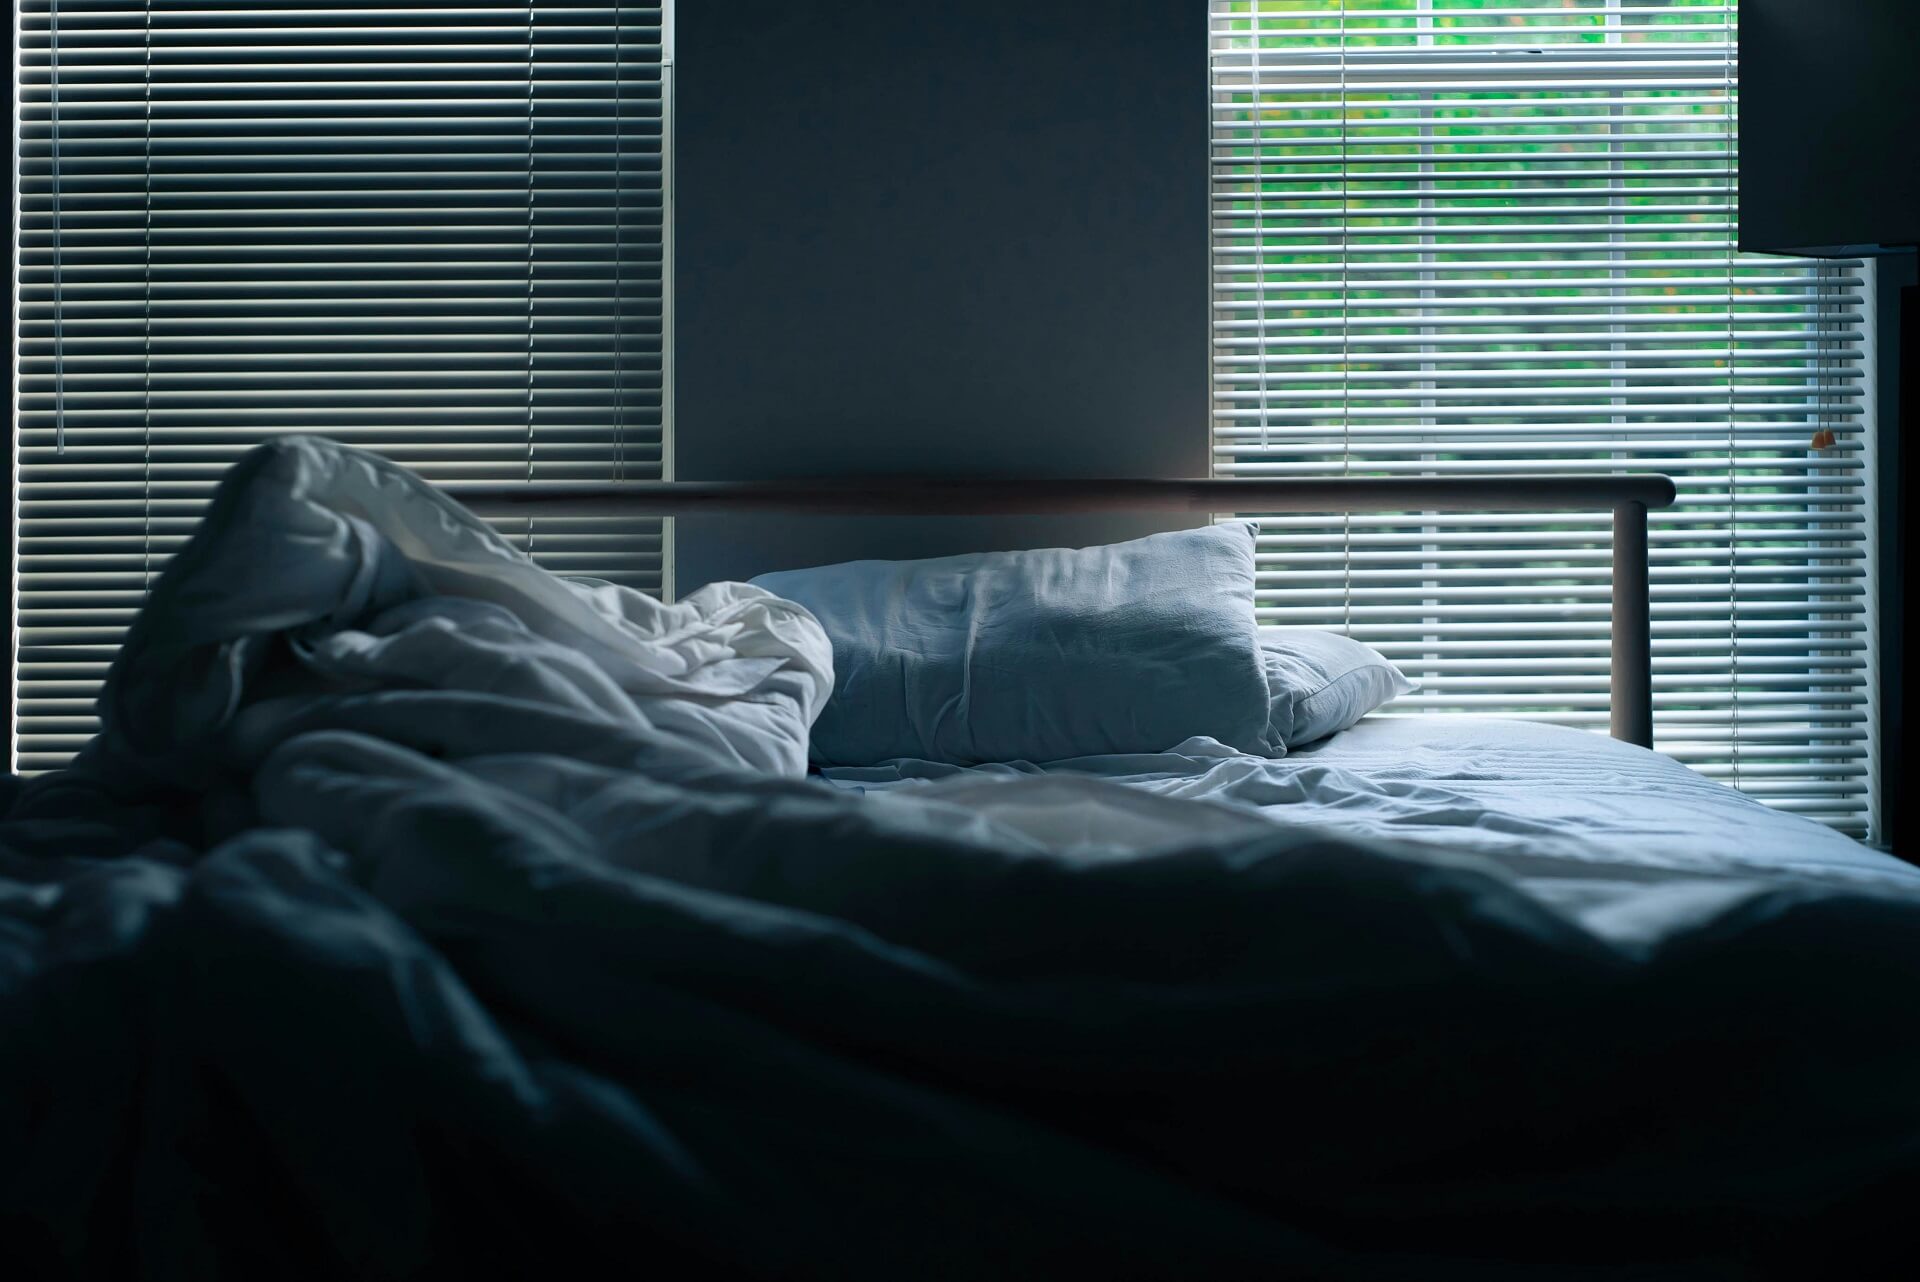 Fall asleep easily and better: how to create an evening sleep routine